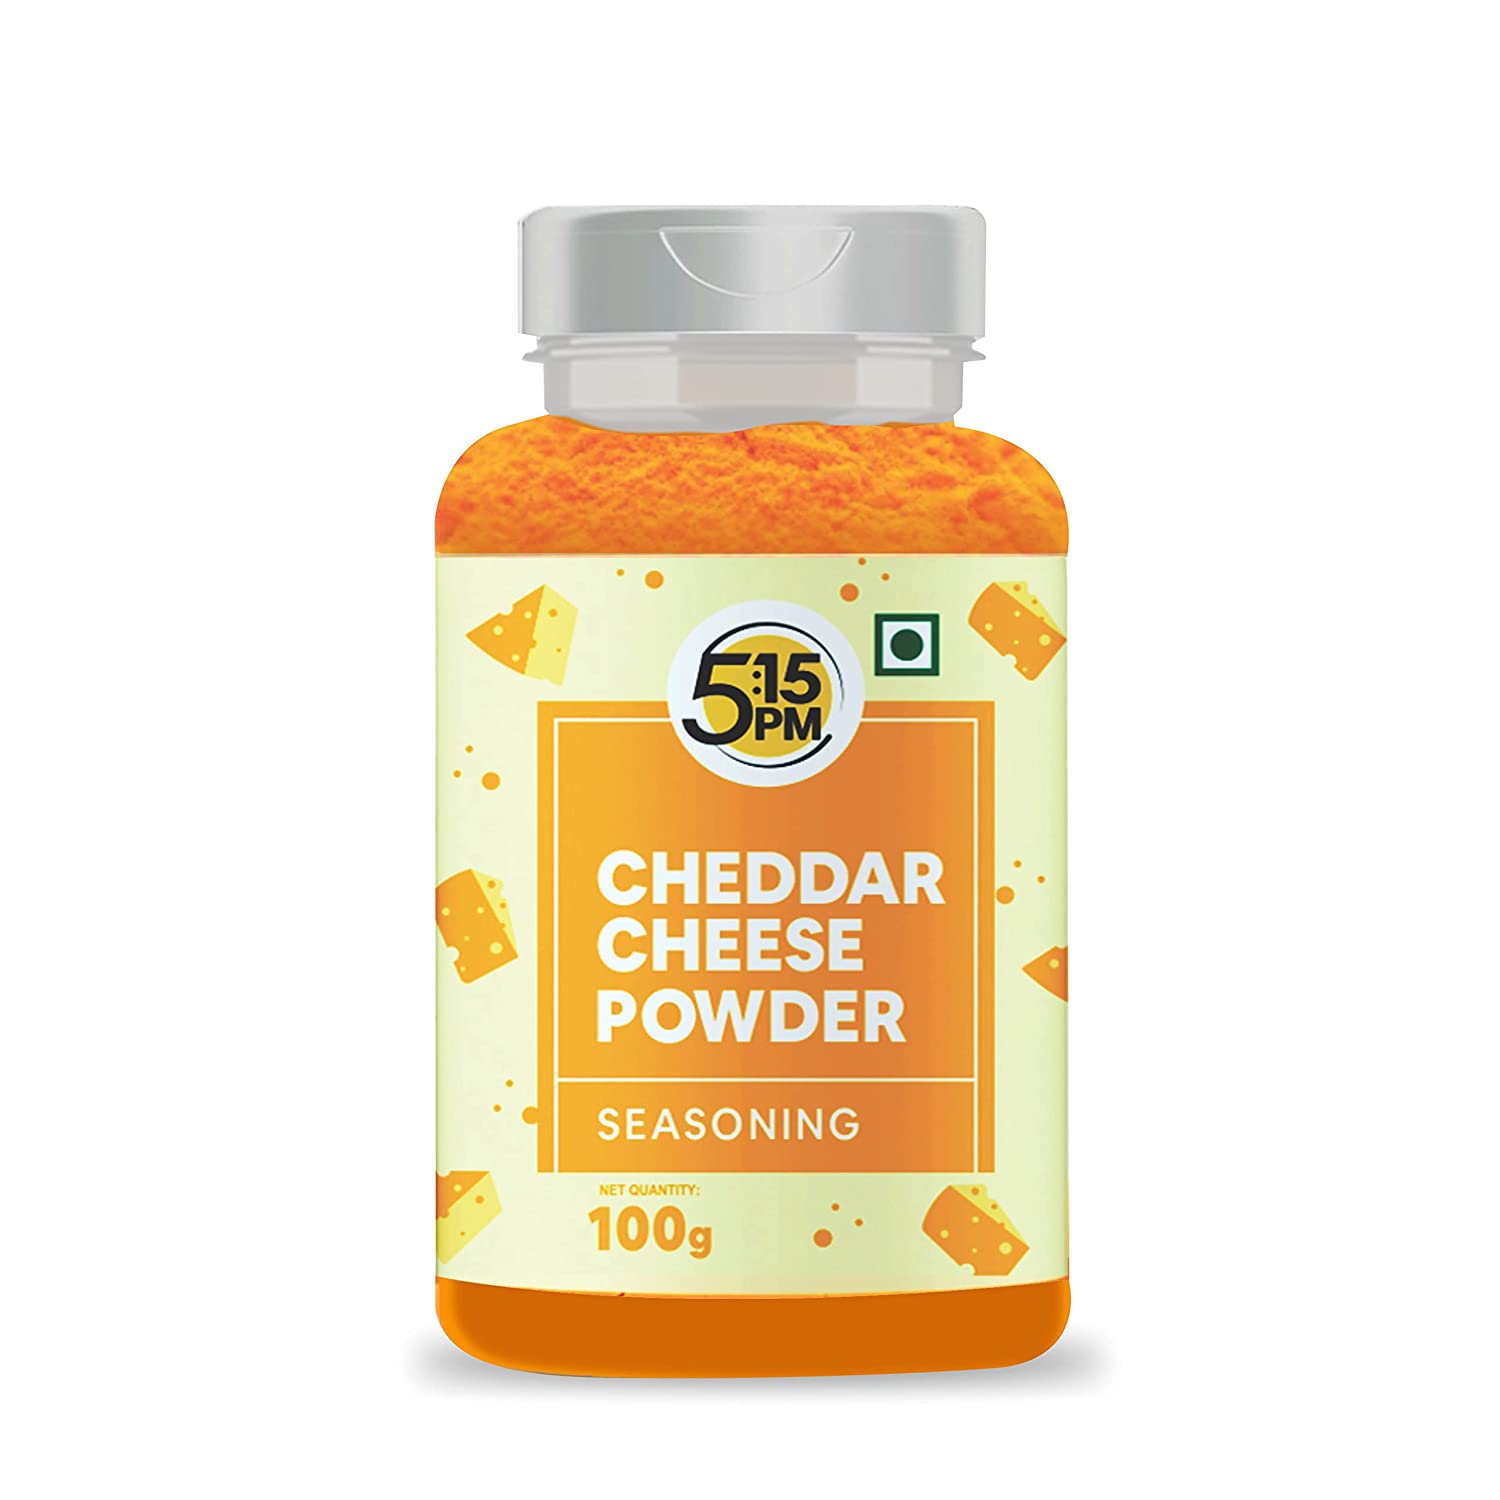 5:15 Pm Cheddar Cheese Powder Image